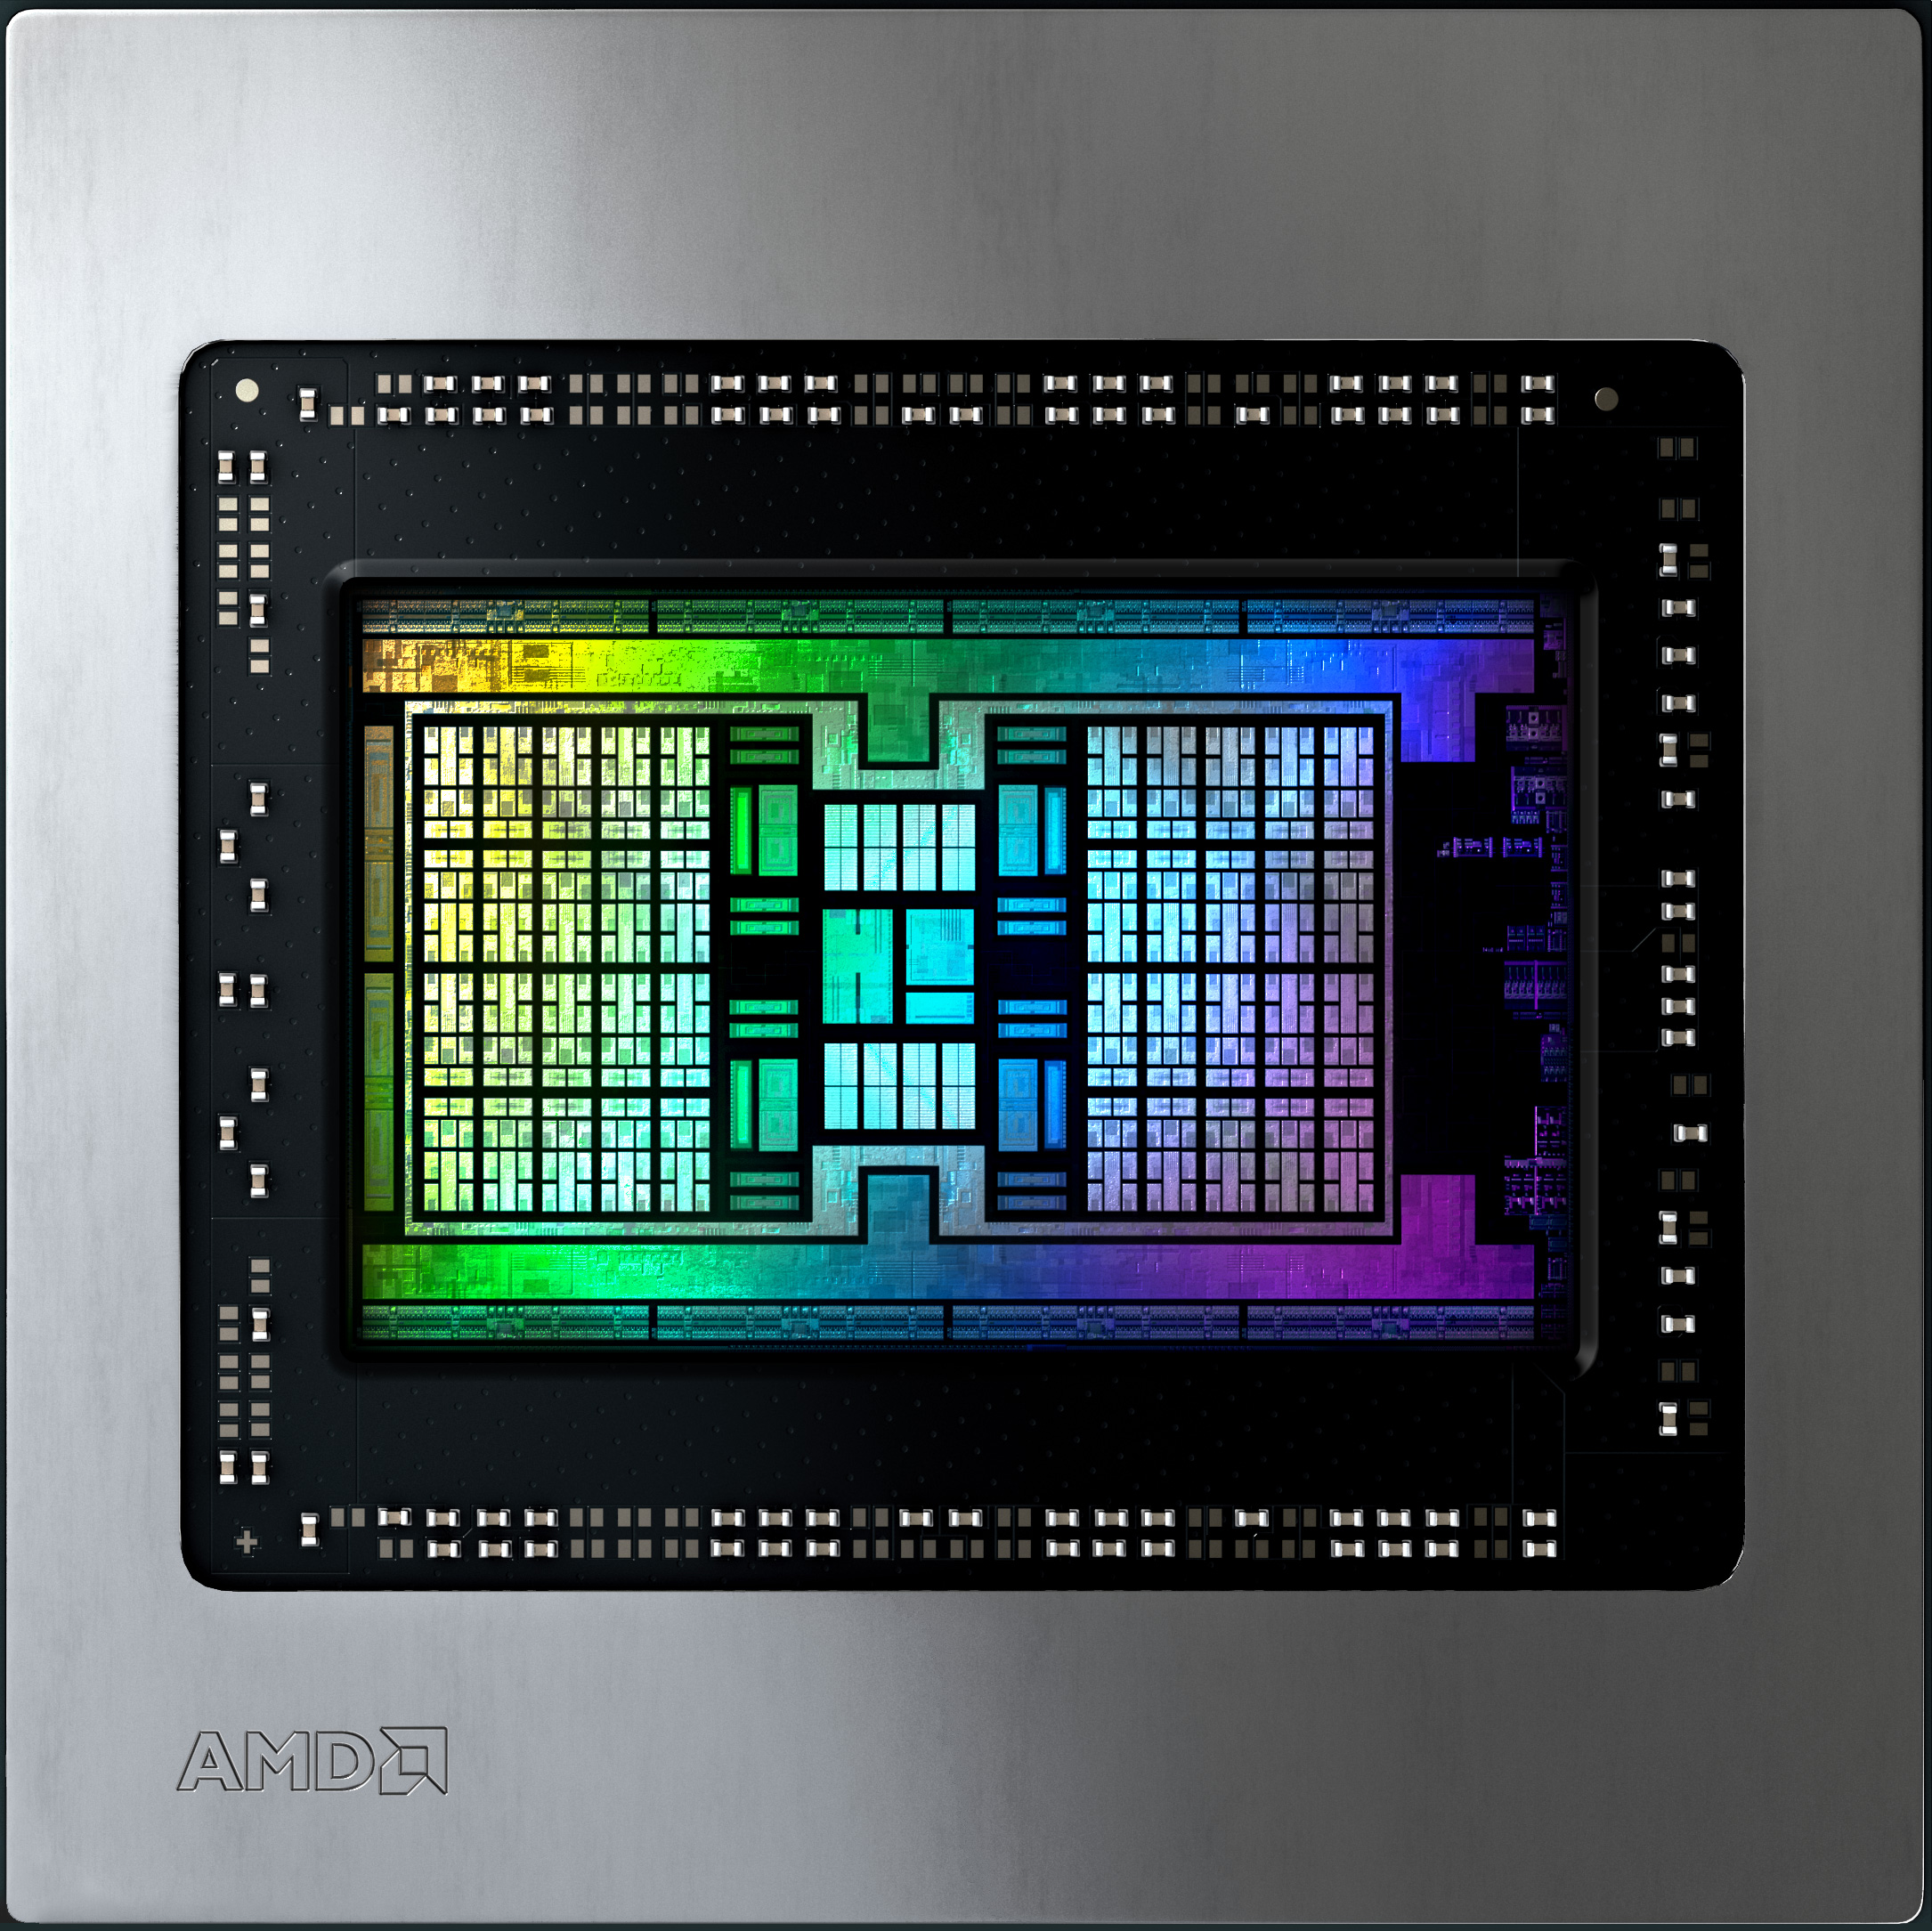 AMD's Big Navi Graphics Cards Launch Nov. 18 With Radeon RX 6800, 6800 XT